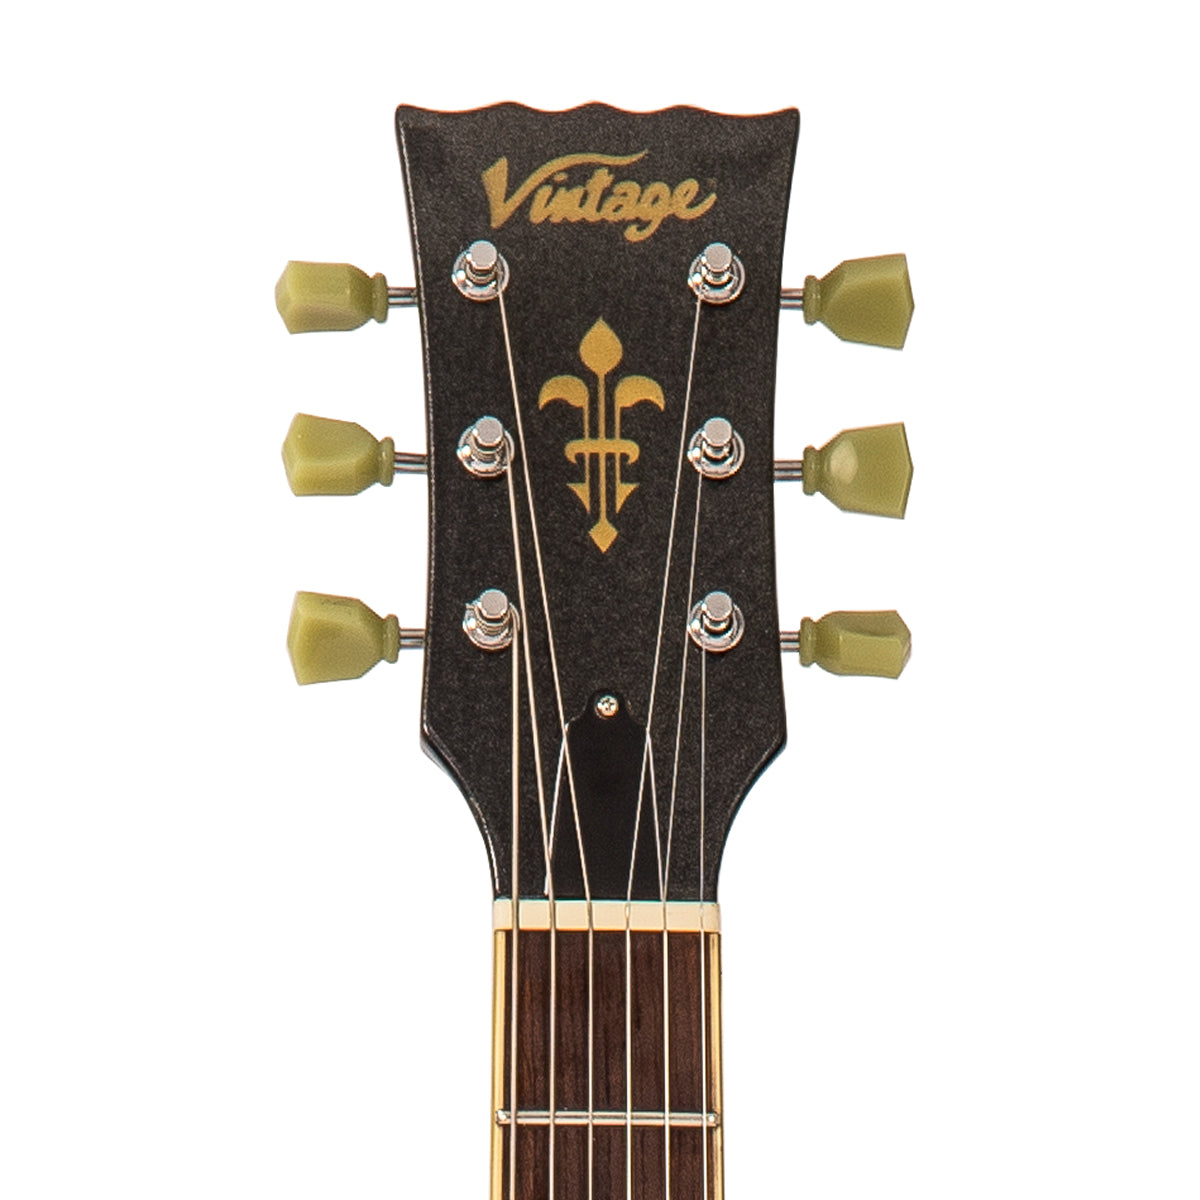 SOLD - Vintage V100 ProShop Unique ~ Metallic Purple, Electric Guitars for sale at Richards Guitars.